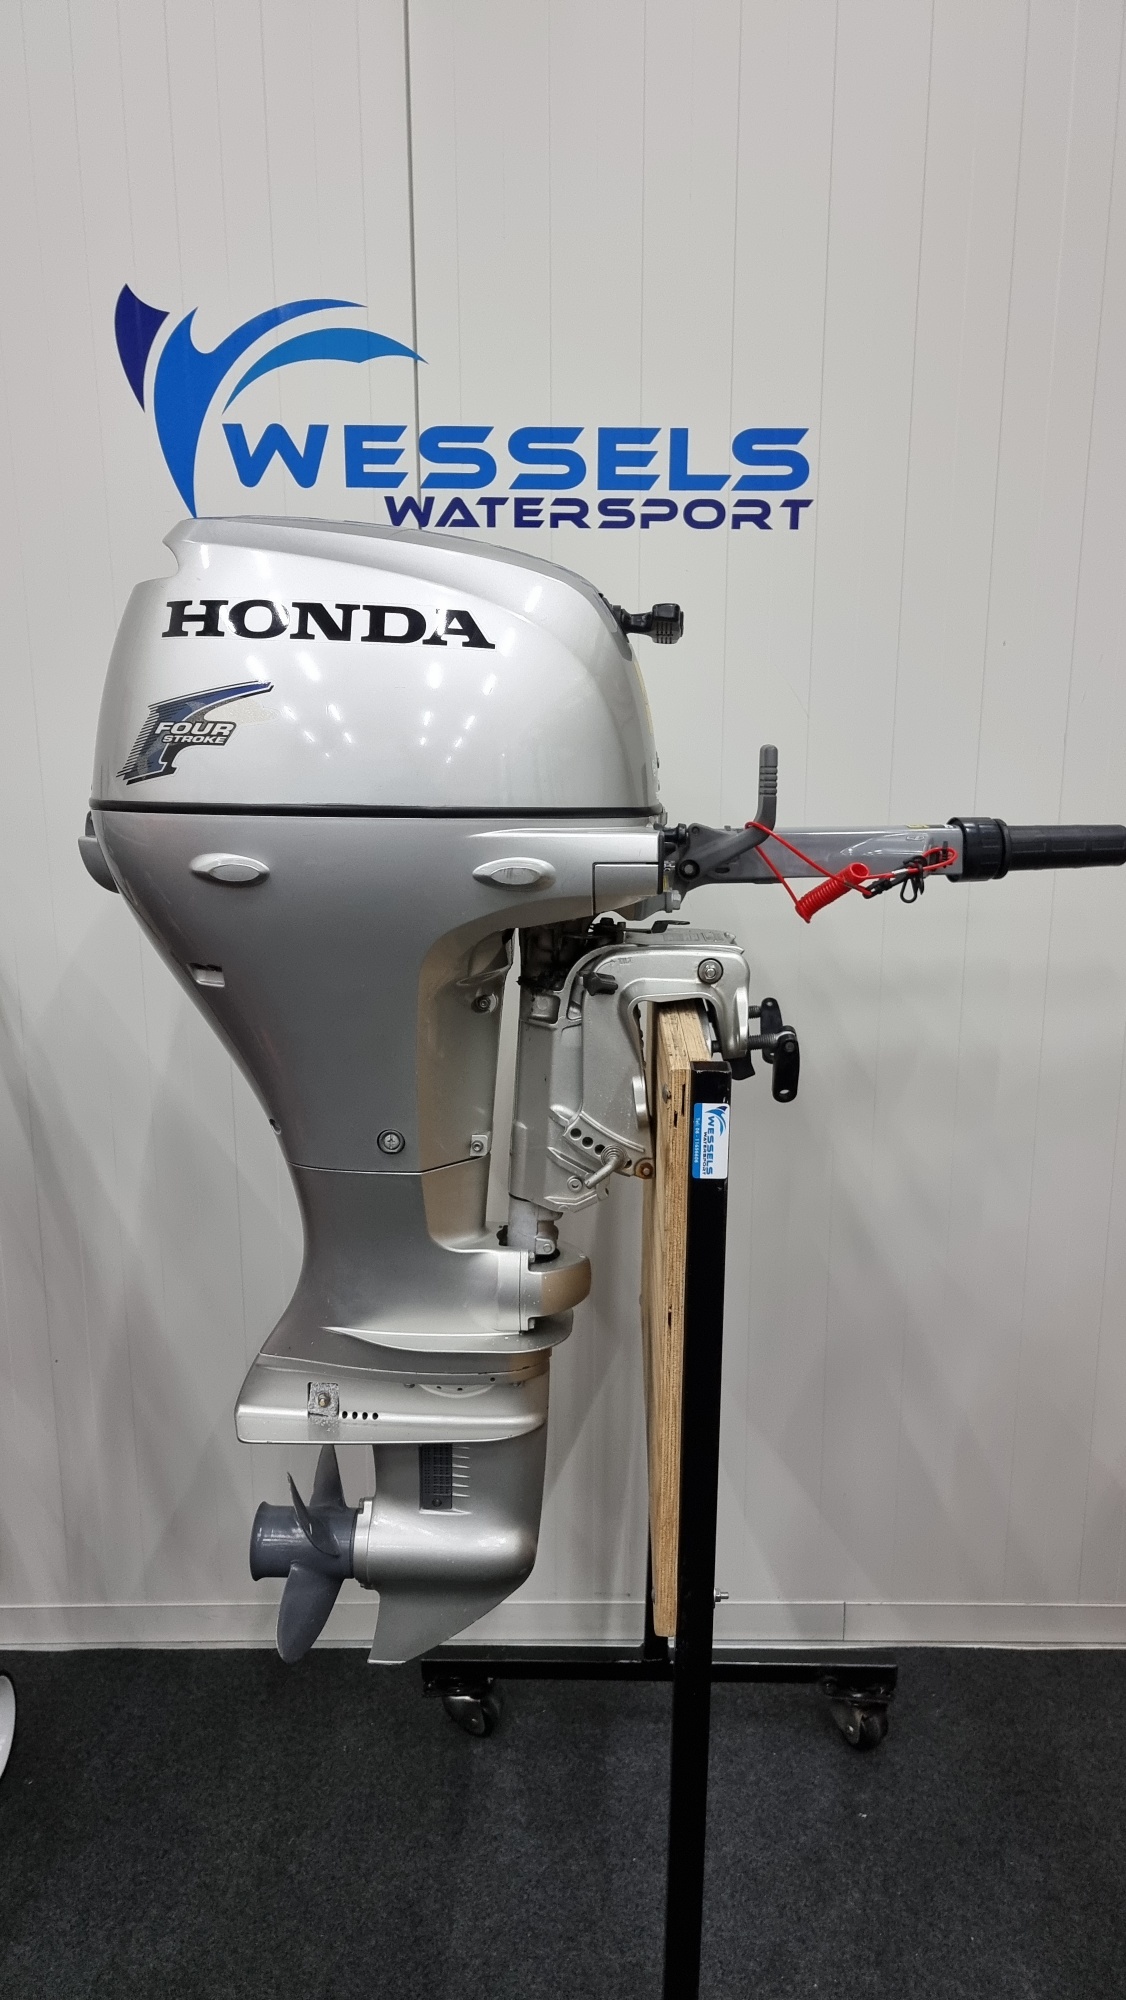 Honda BF 15